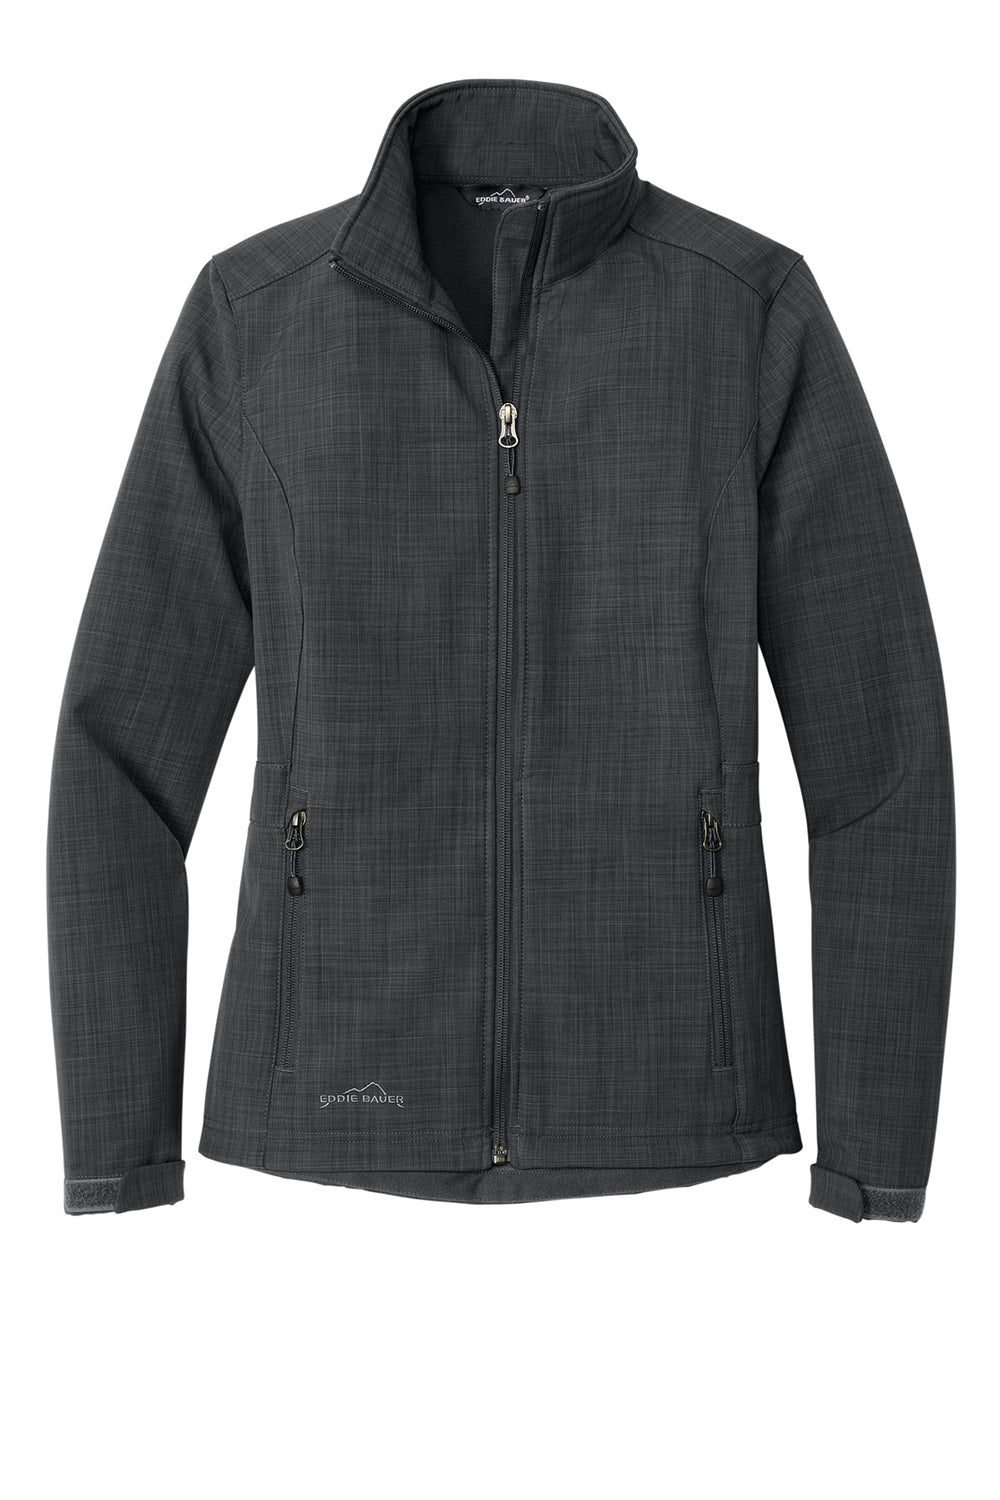 Eddie Bauer EB533 Womens Shaded Crosshatch Wind & Water Resistant Full Zip Jacket Grey Flat Front